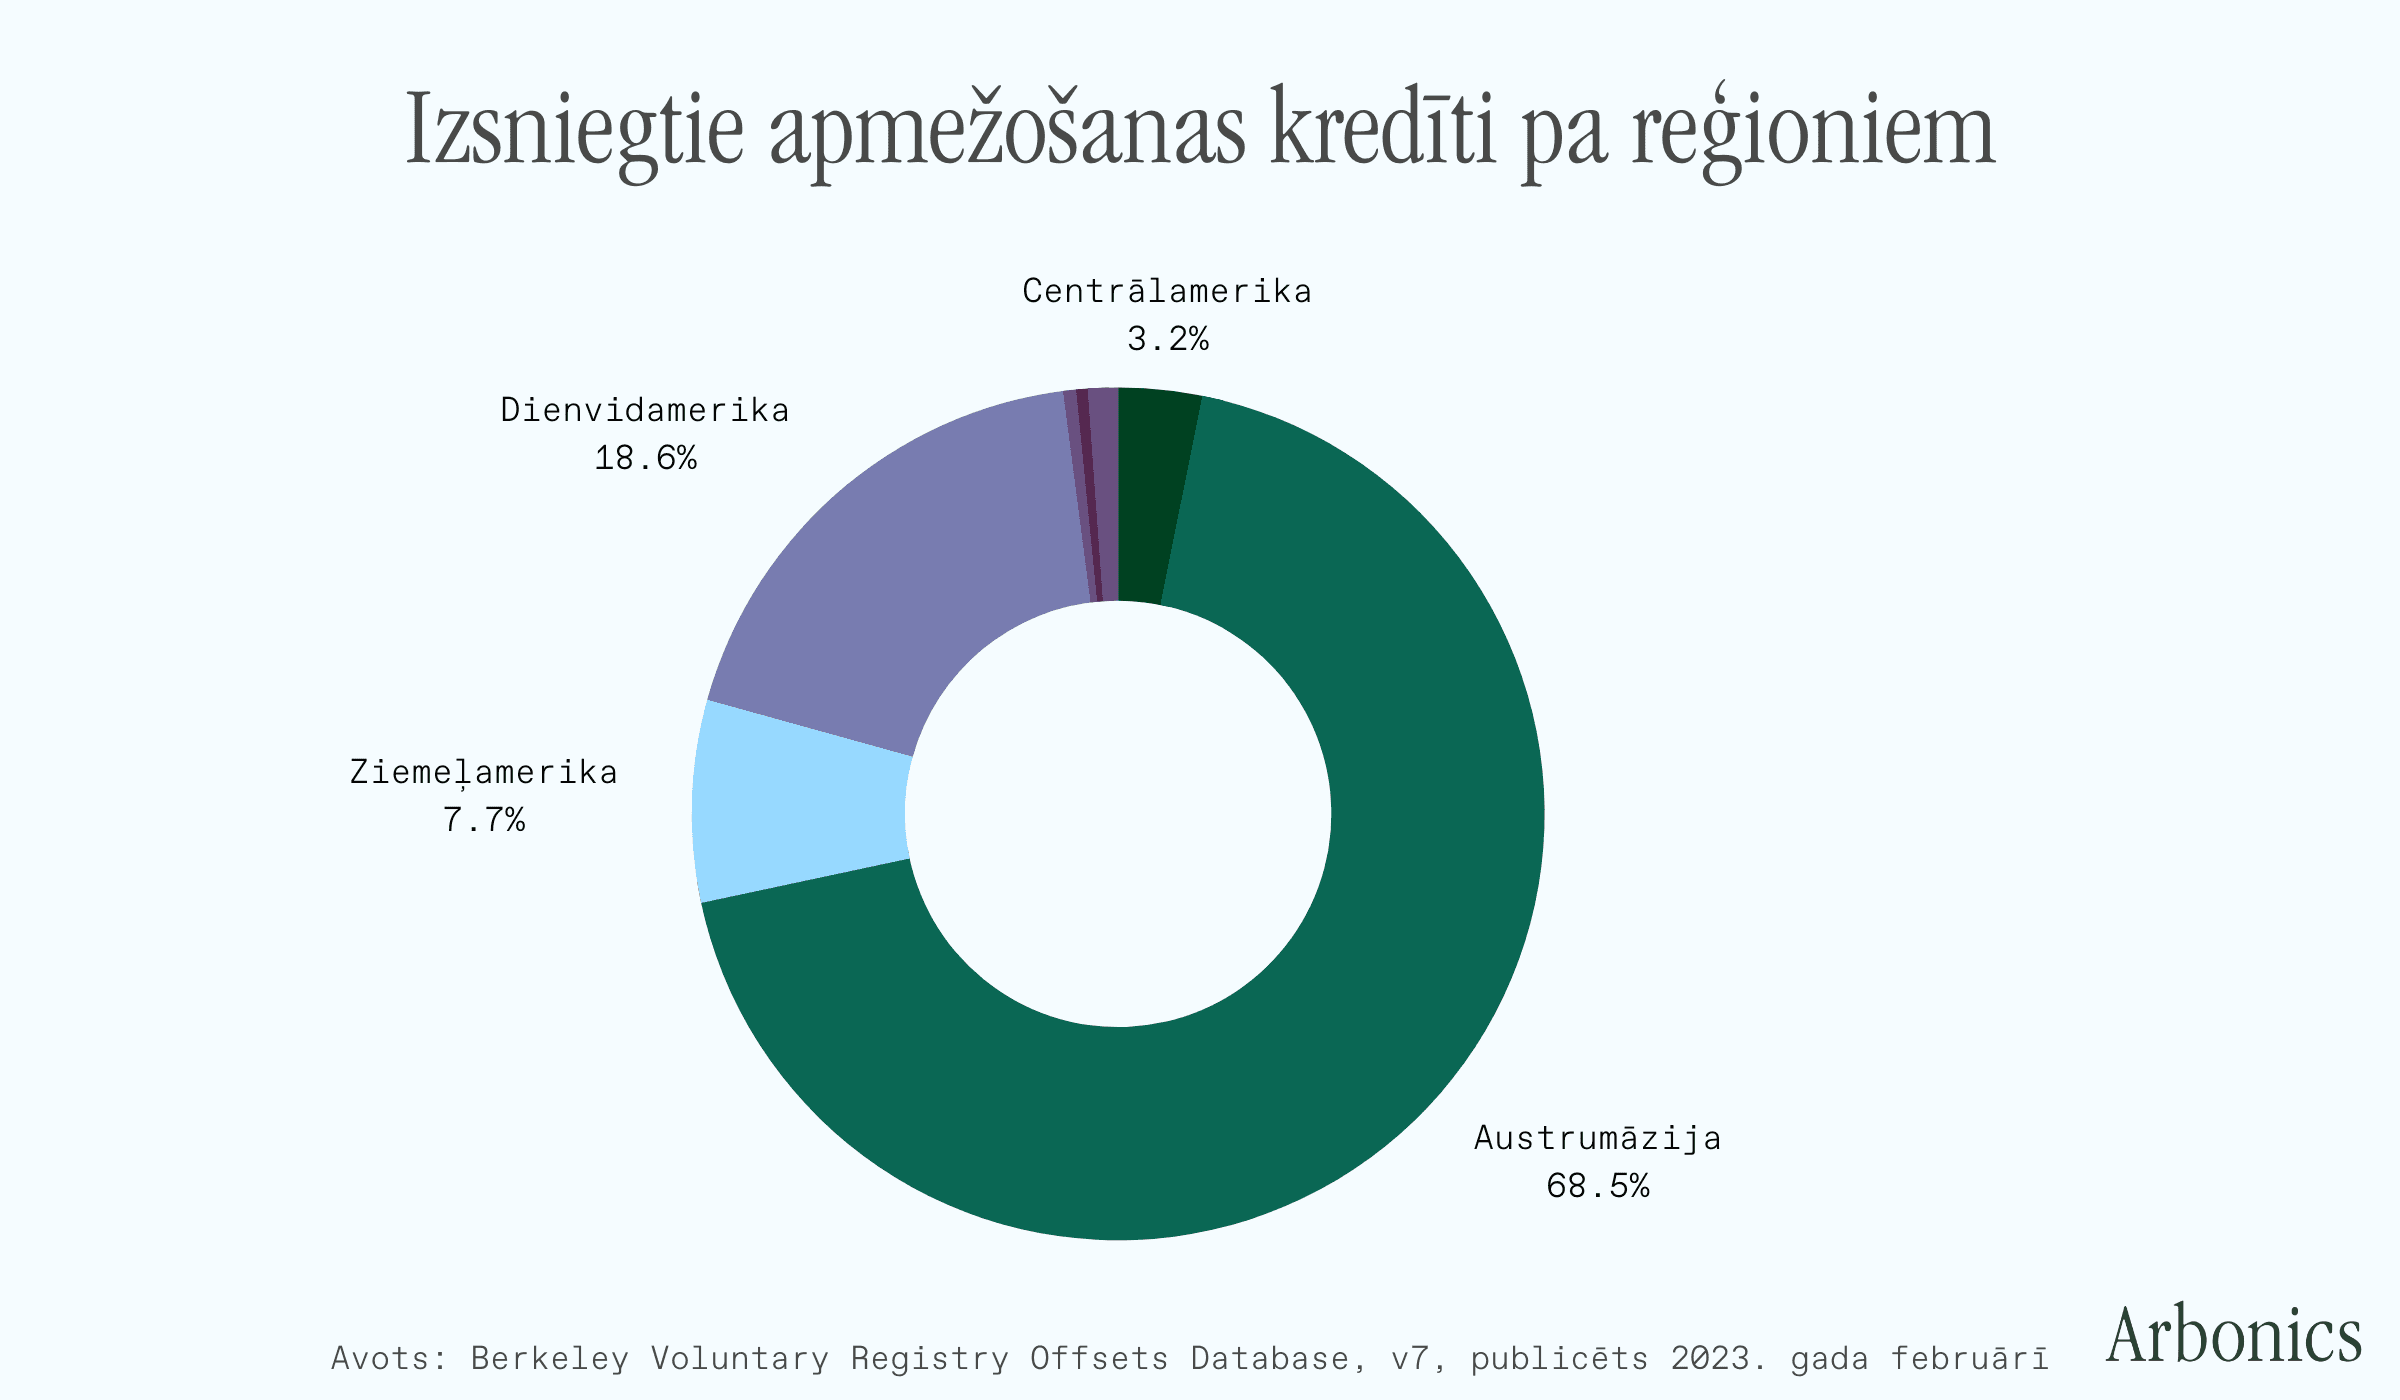 LV_Afforestation credits by region.png